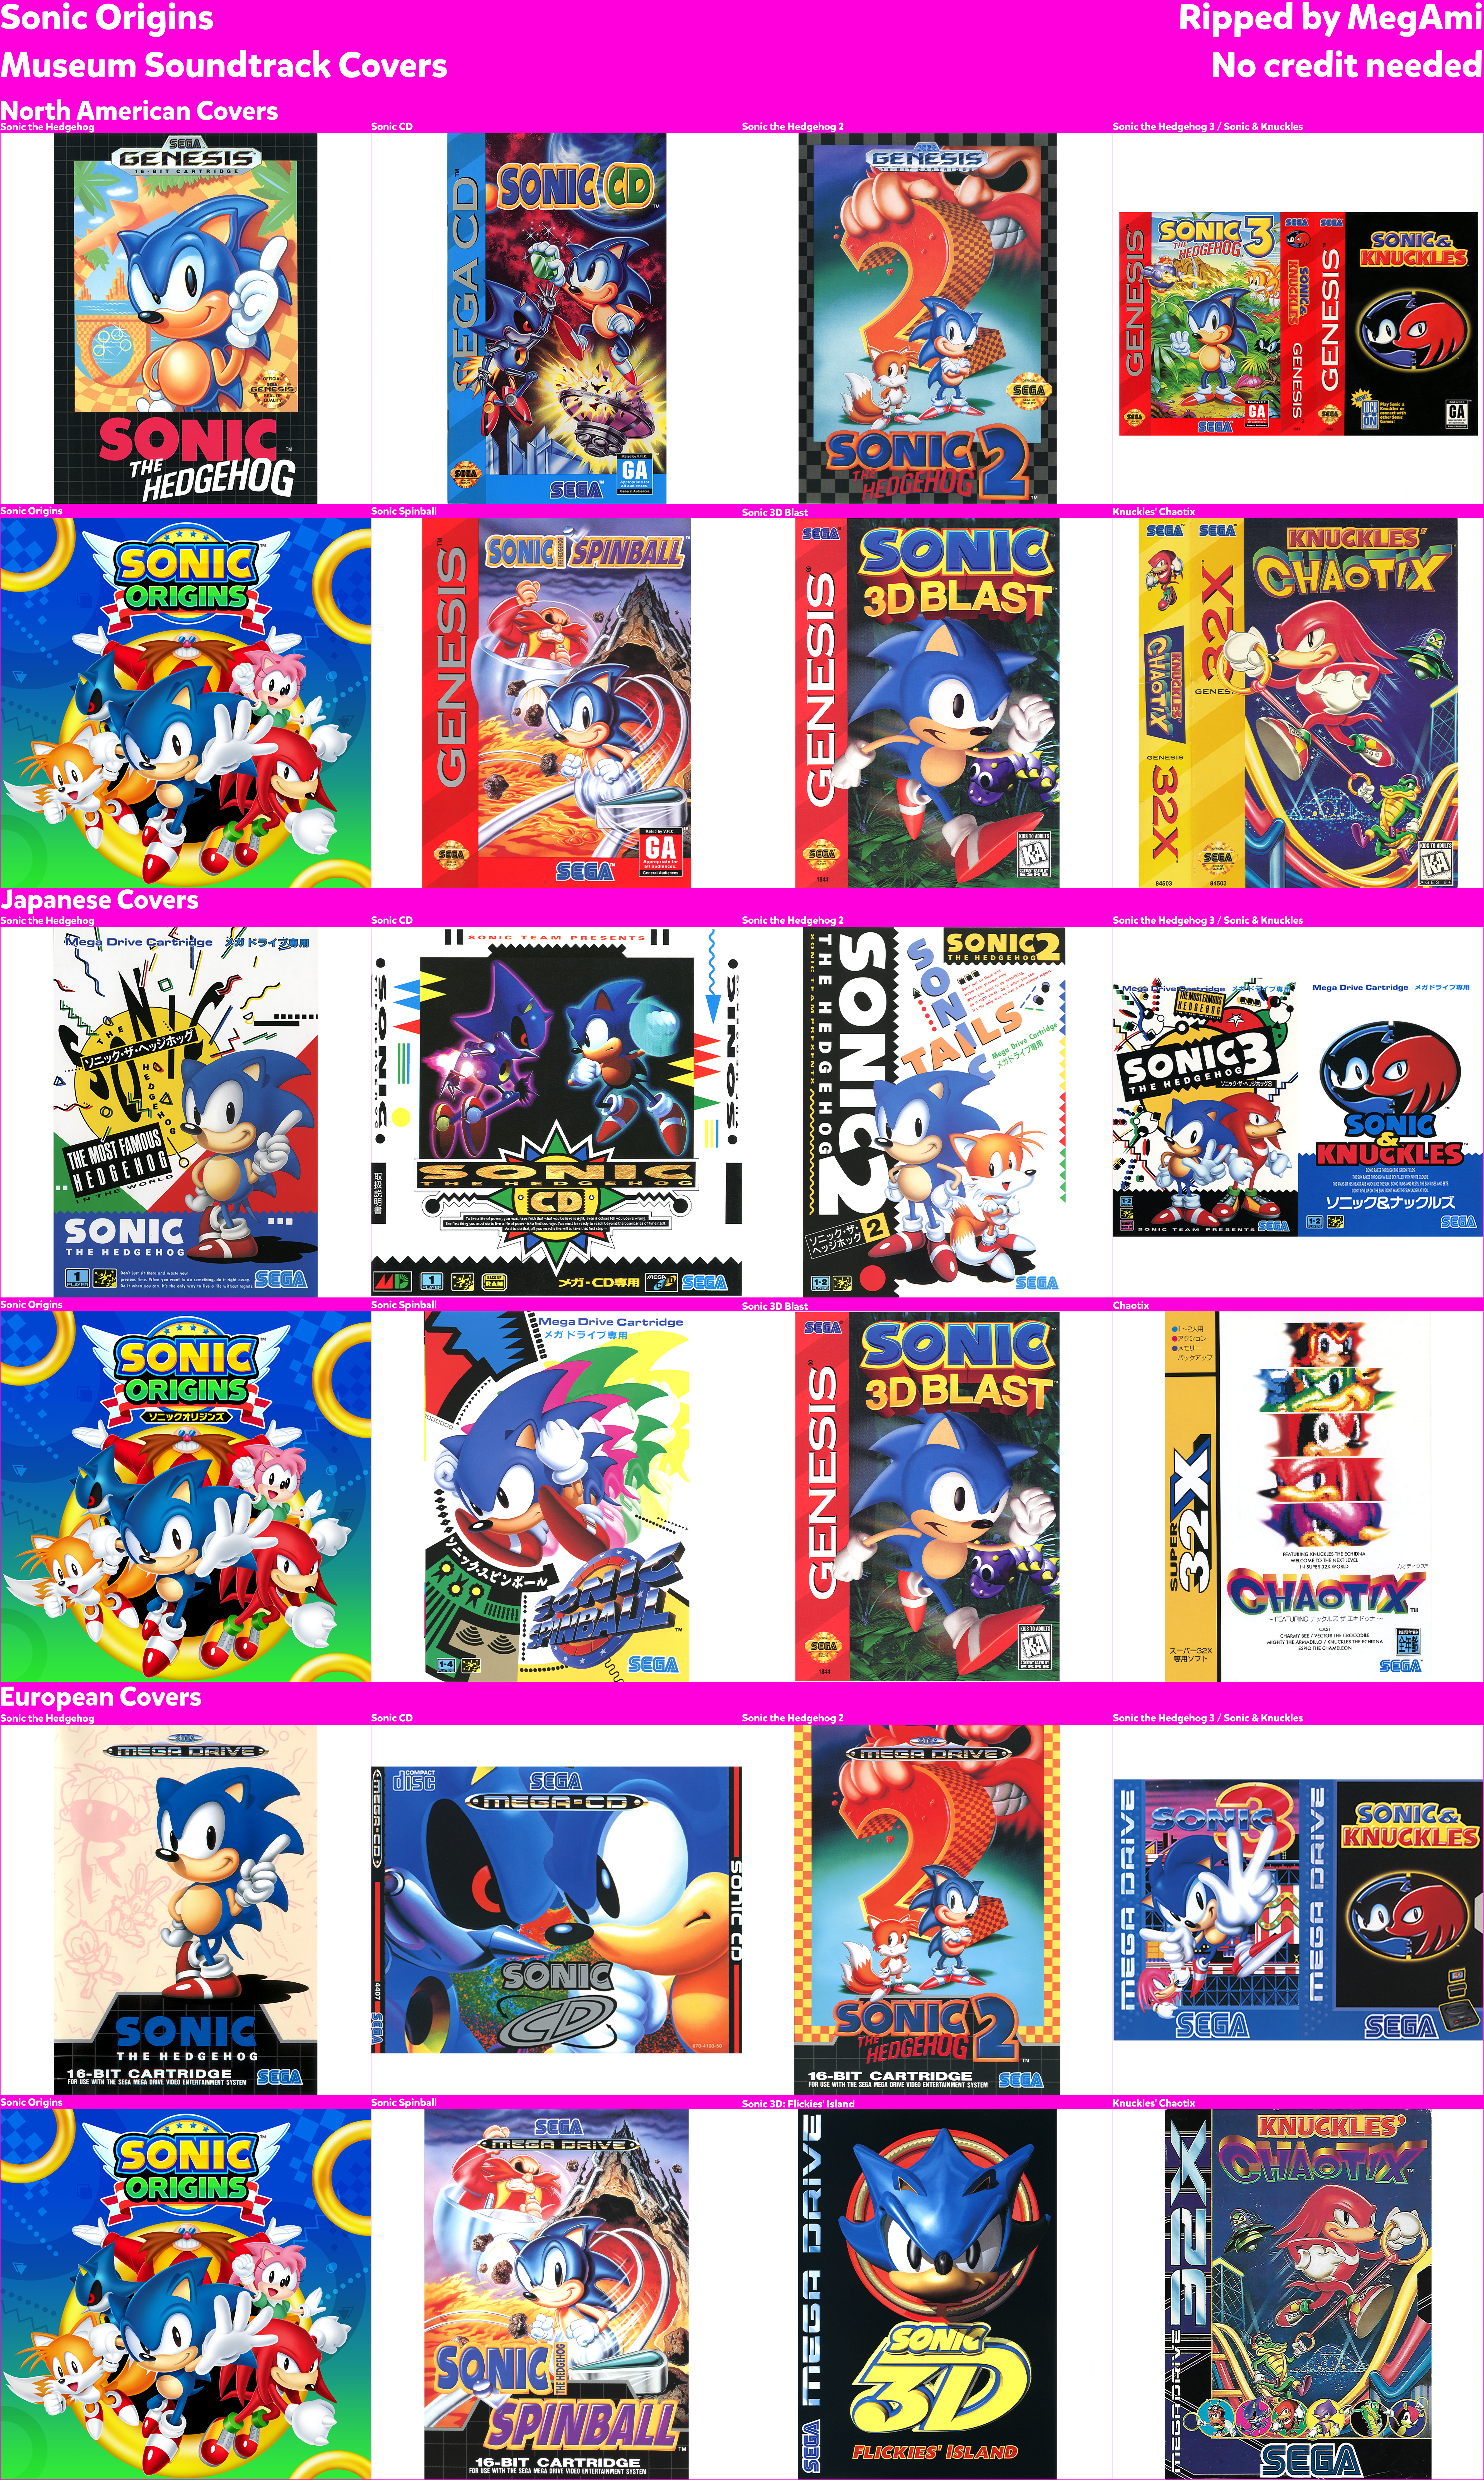 Sonic Origins - Museum Soundtrack Covers